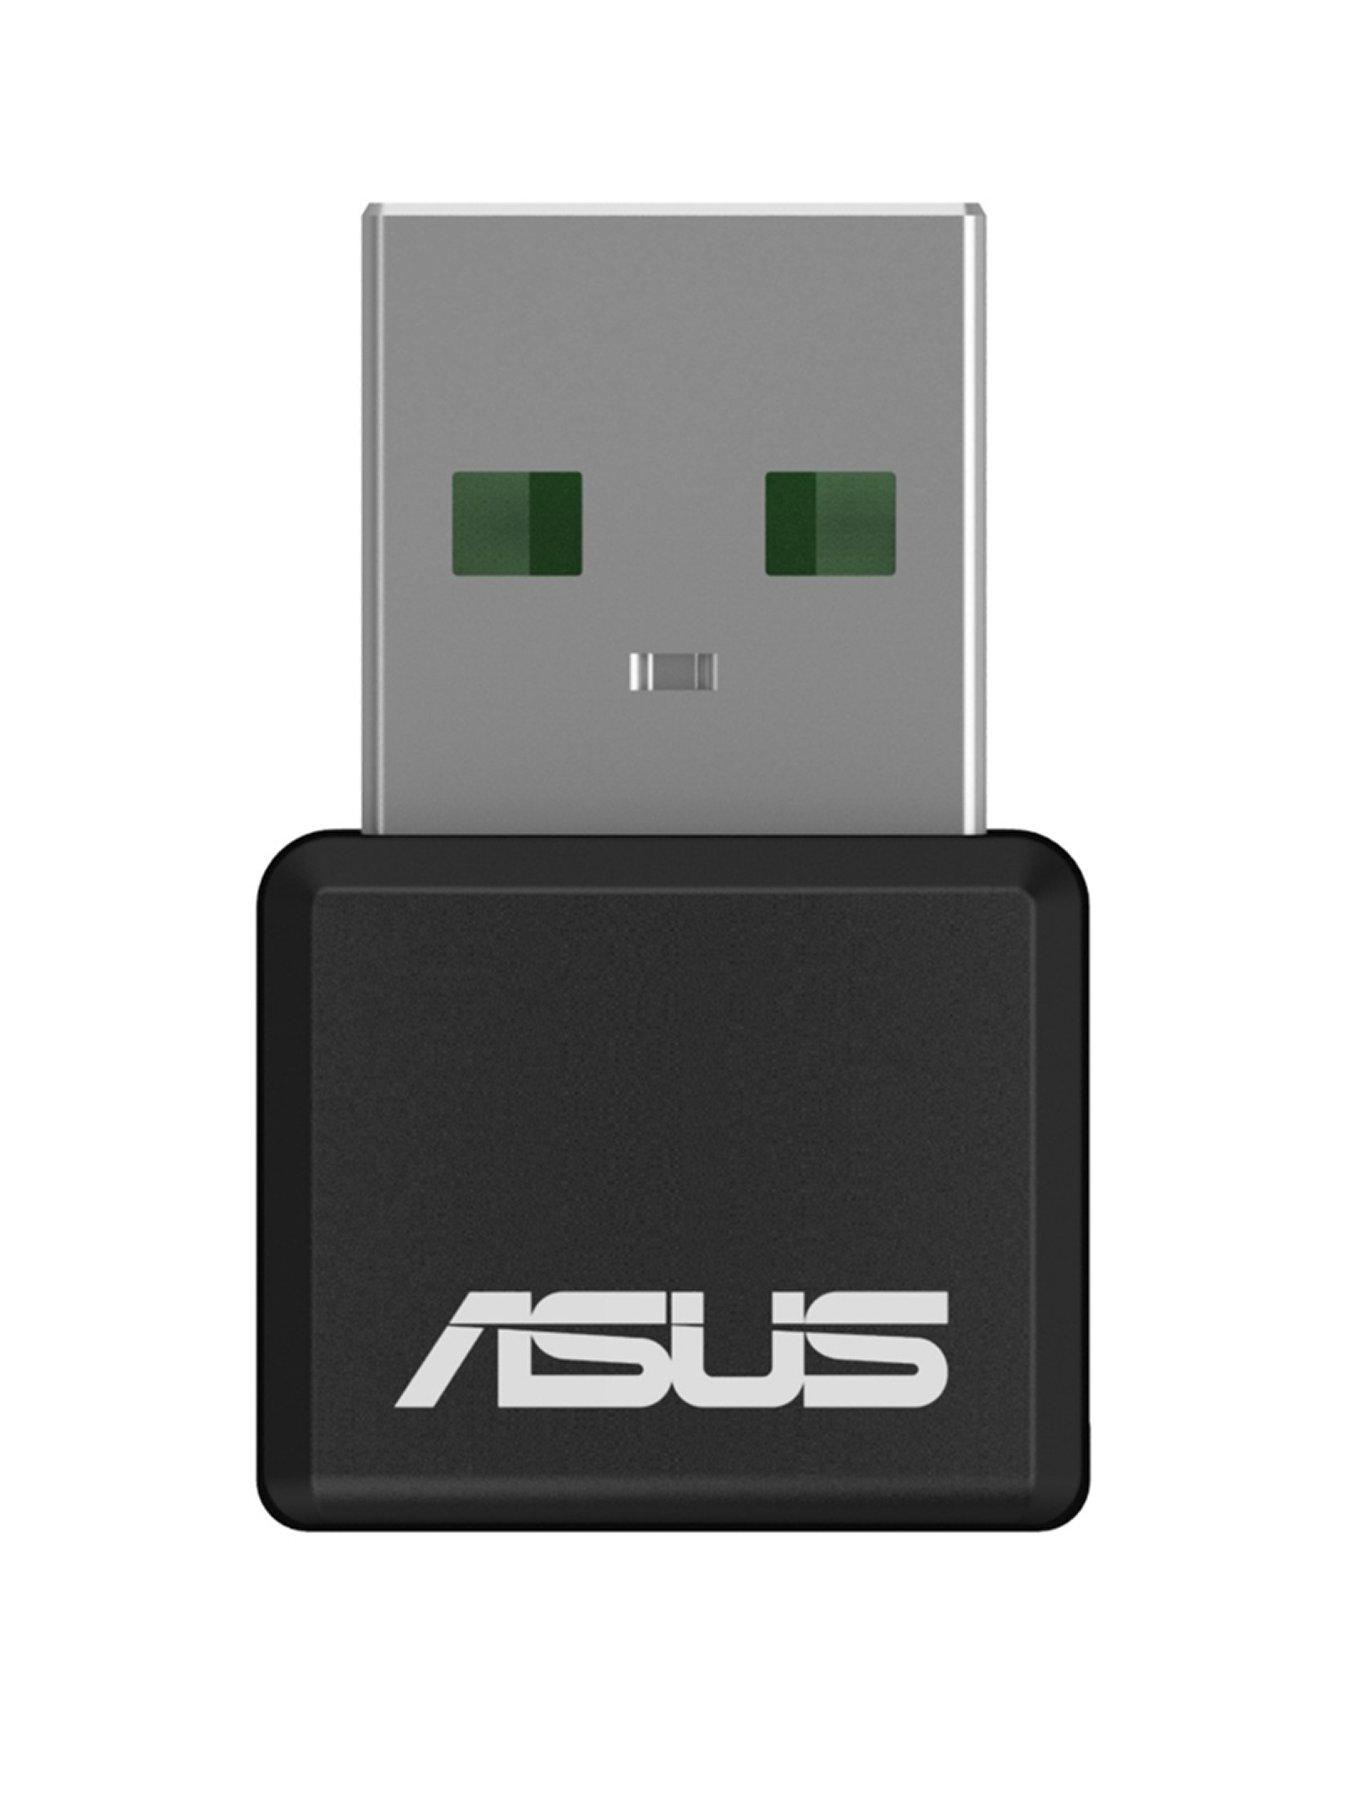 Asus USB-AX55 Nano Dual Band Wireless AX1800 USB Adapter, Smallest ...